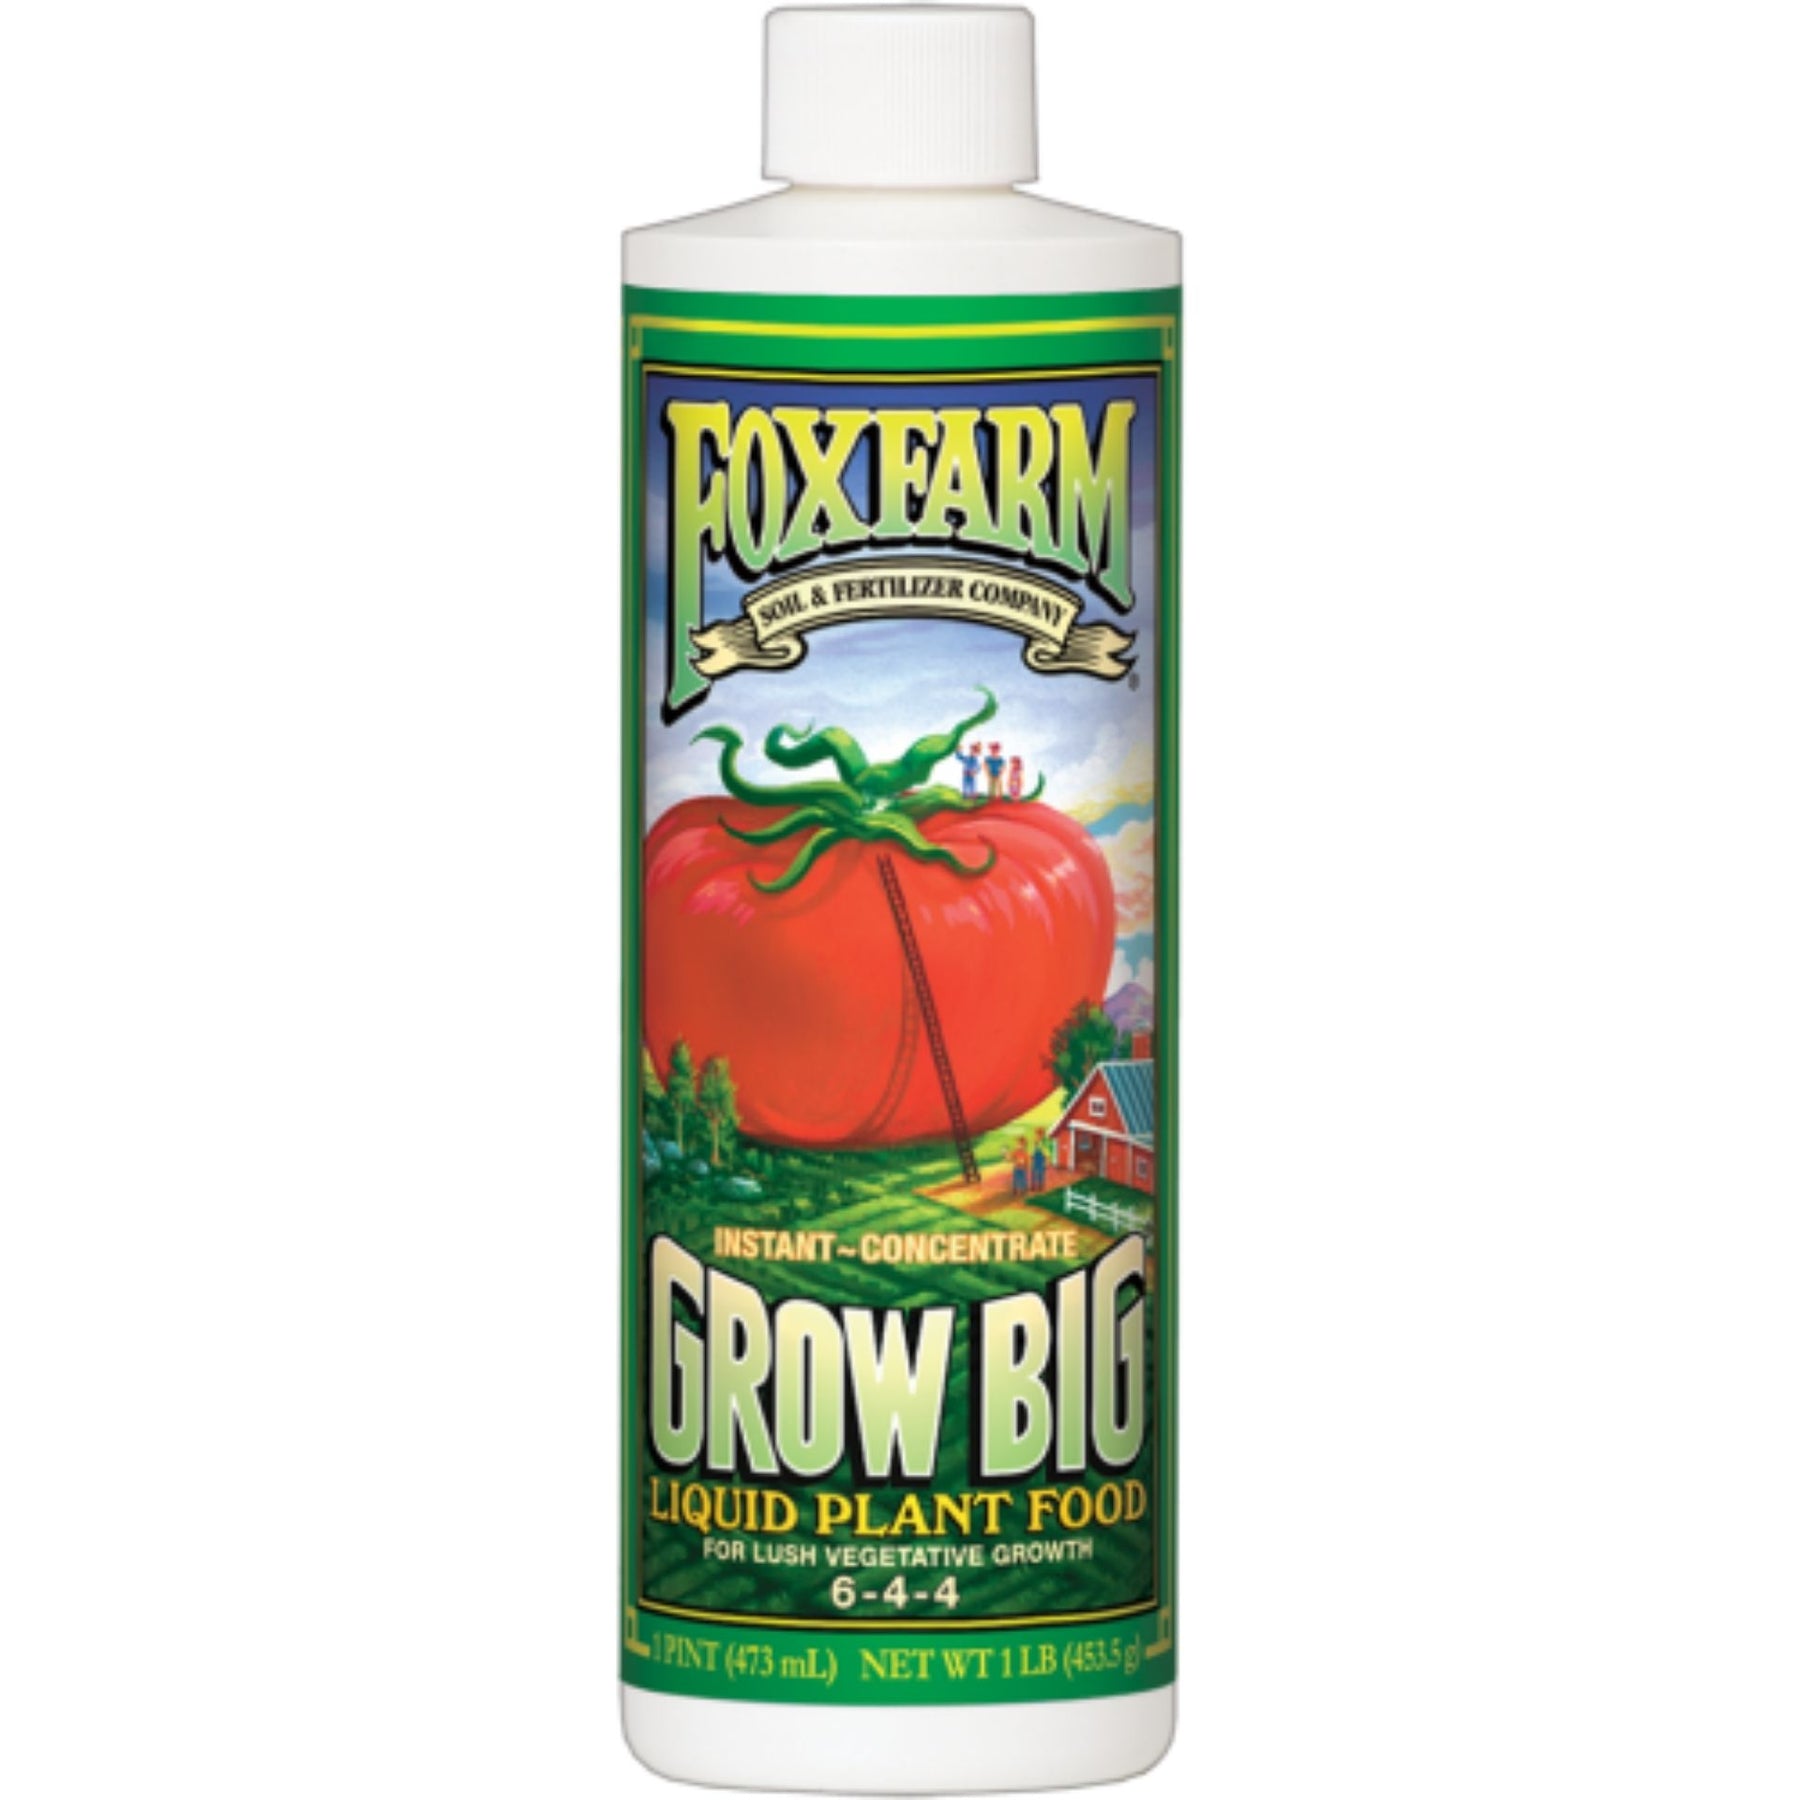 Fox Farm Grow Big Liquid Plant Food 16 oz.-Southern Agriculture